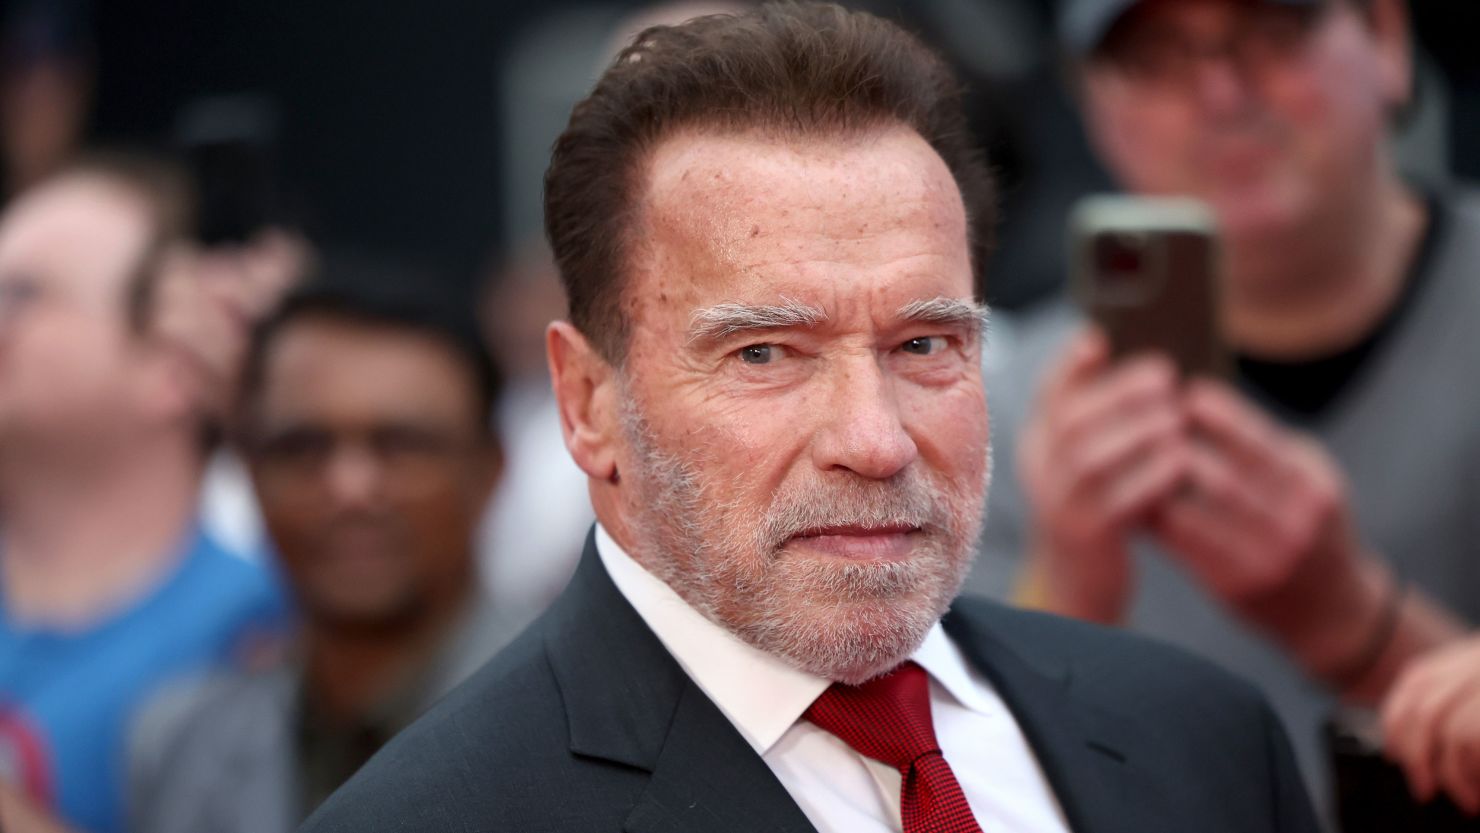 Arnold Schwarzenegger acknowledges he's a mere mortal when it